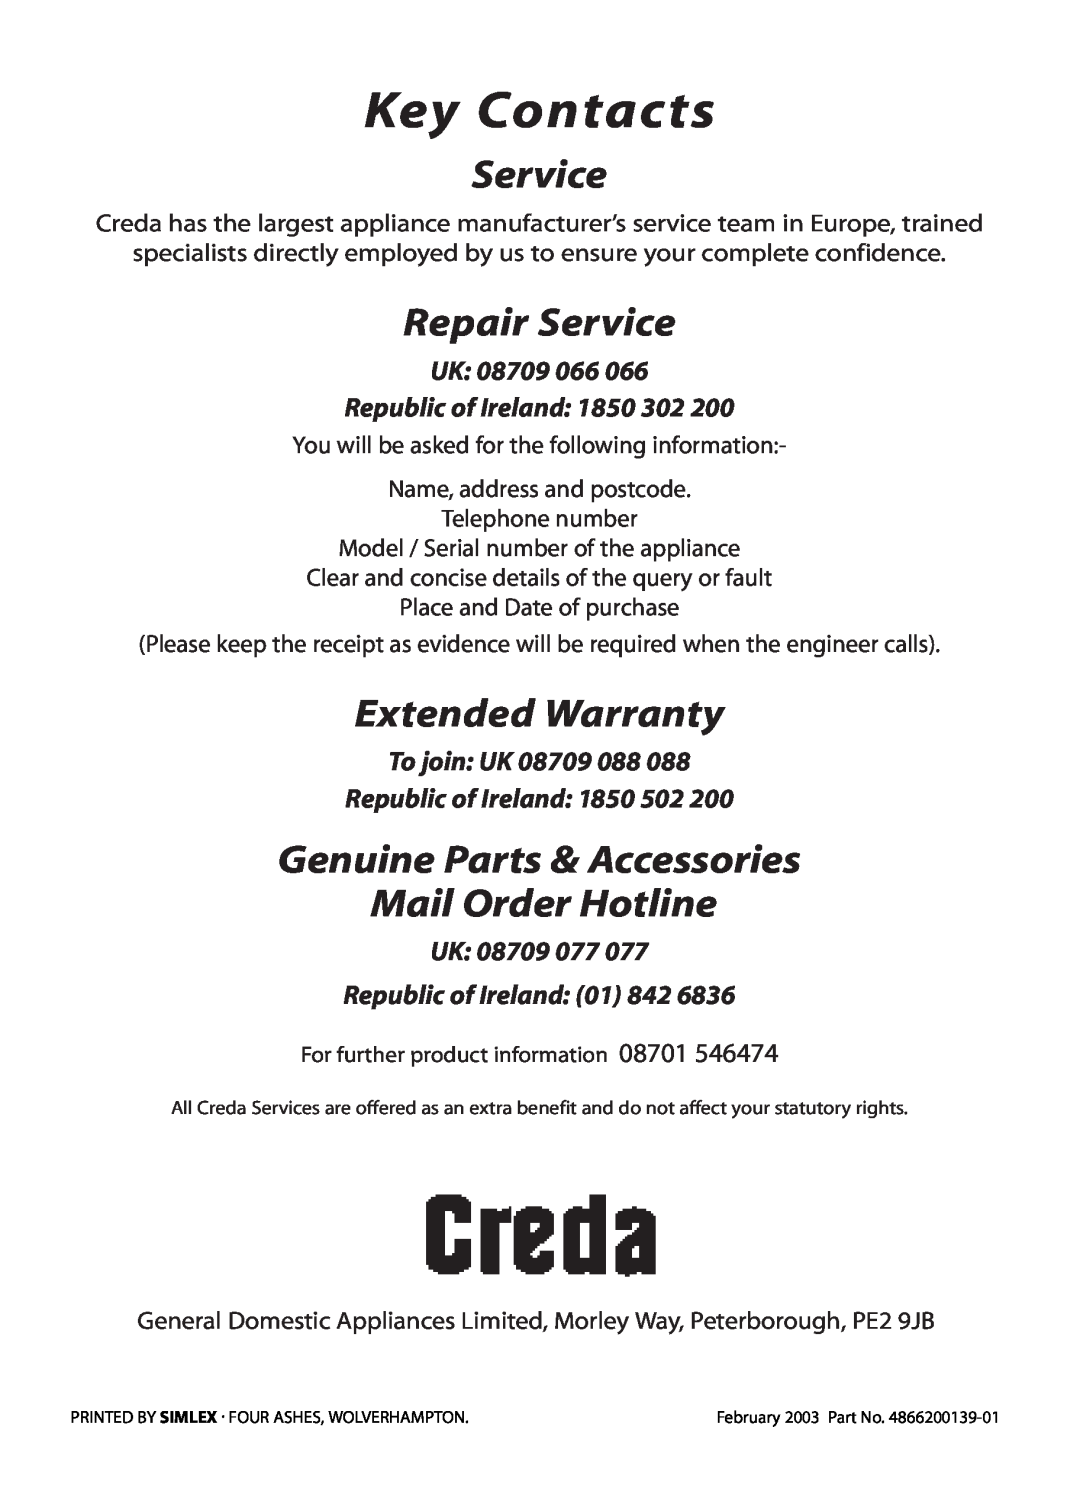 Creda E530E/R530E Key Contacts, Repair Service, Extended Warranty, Genuine Parts & Accessories Mail Order Hotline 